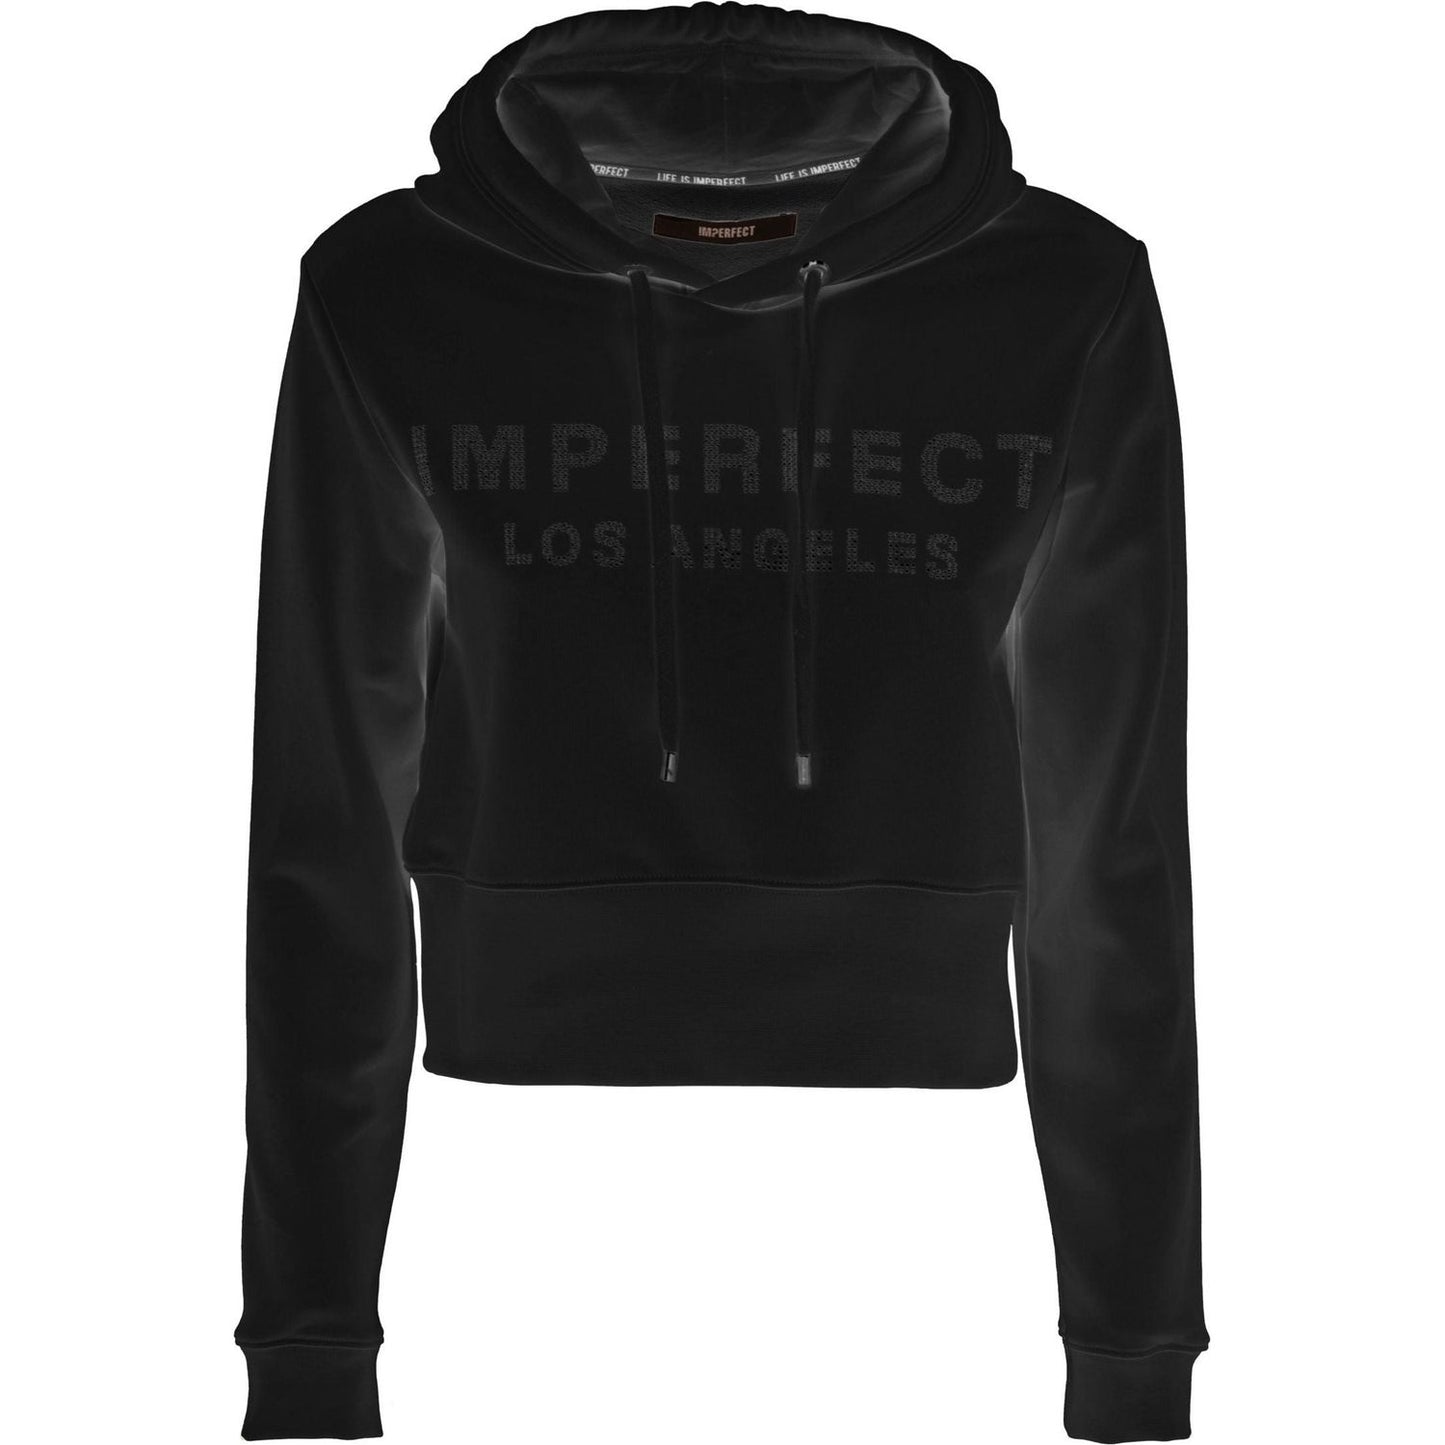 Imperfect Glitzy Logo Embellished Black Hoodie black-cotton-sweater-16 product-9071-1512546516-scaled-da9a34d3-9af.jpg